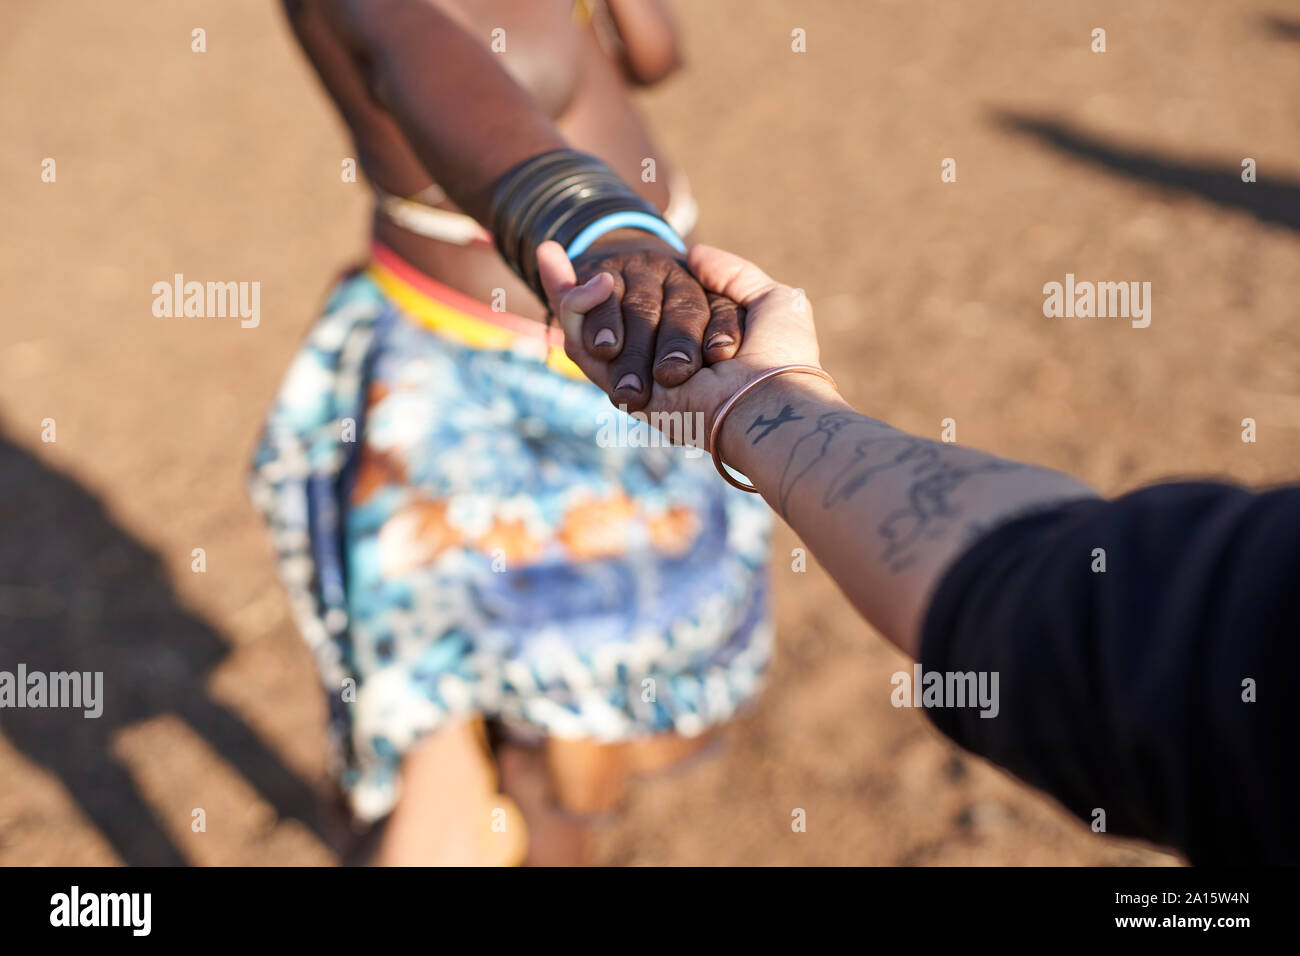 Muhacaona traditionelle Frau und weiße Frau, Hände halten, Oncocua, Angola Stockfoto